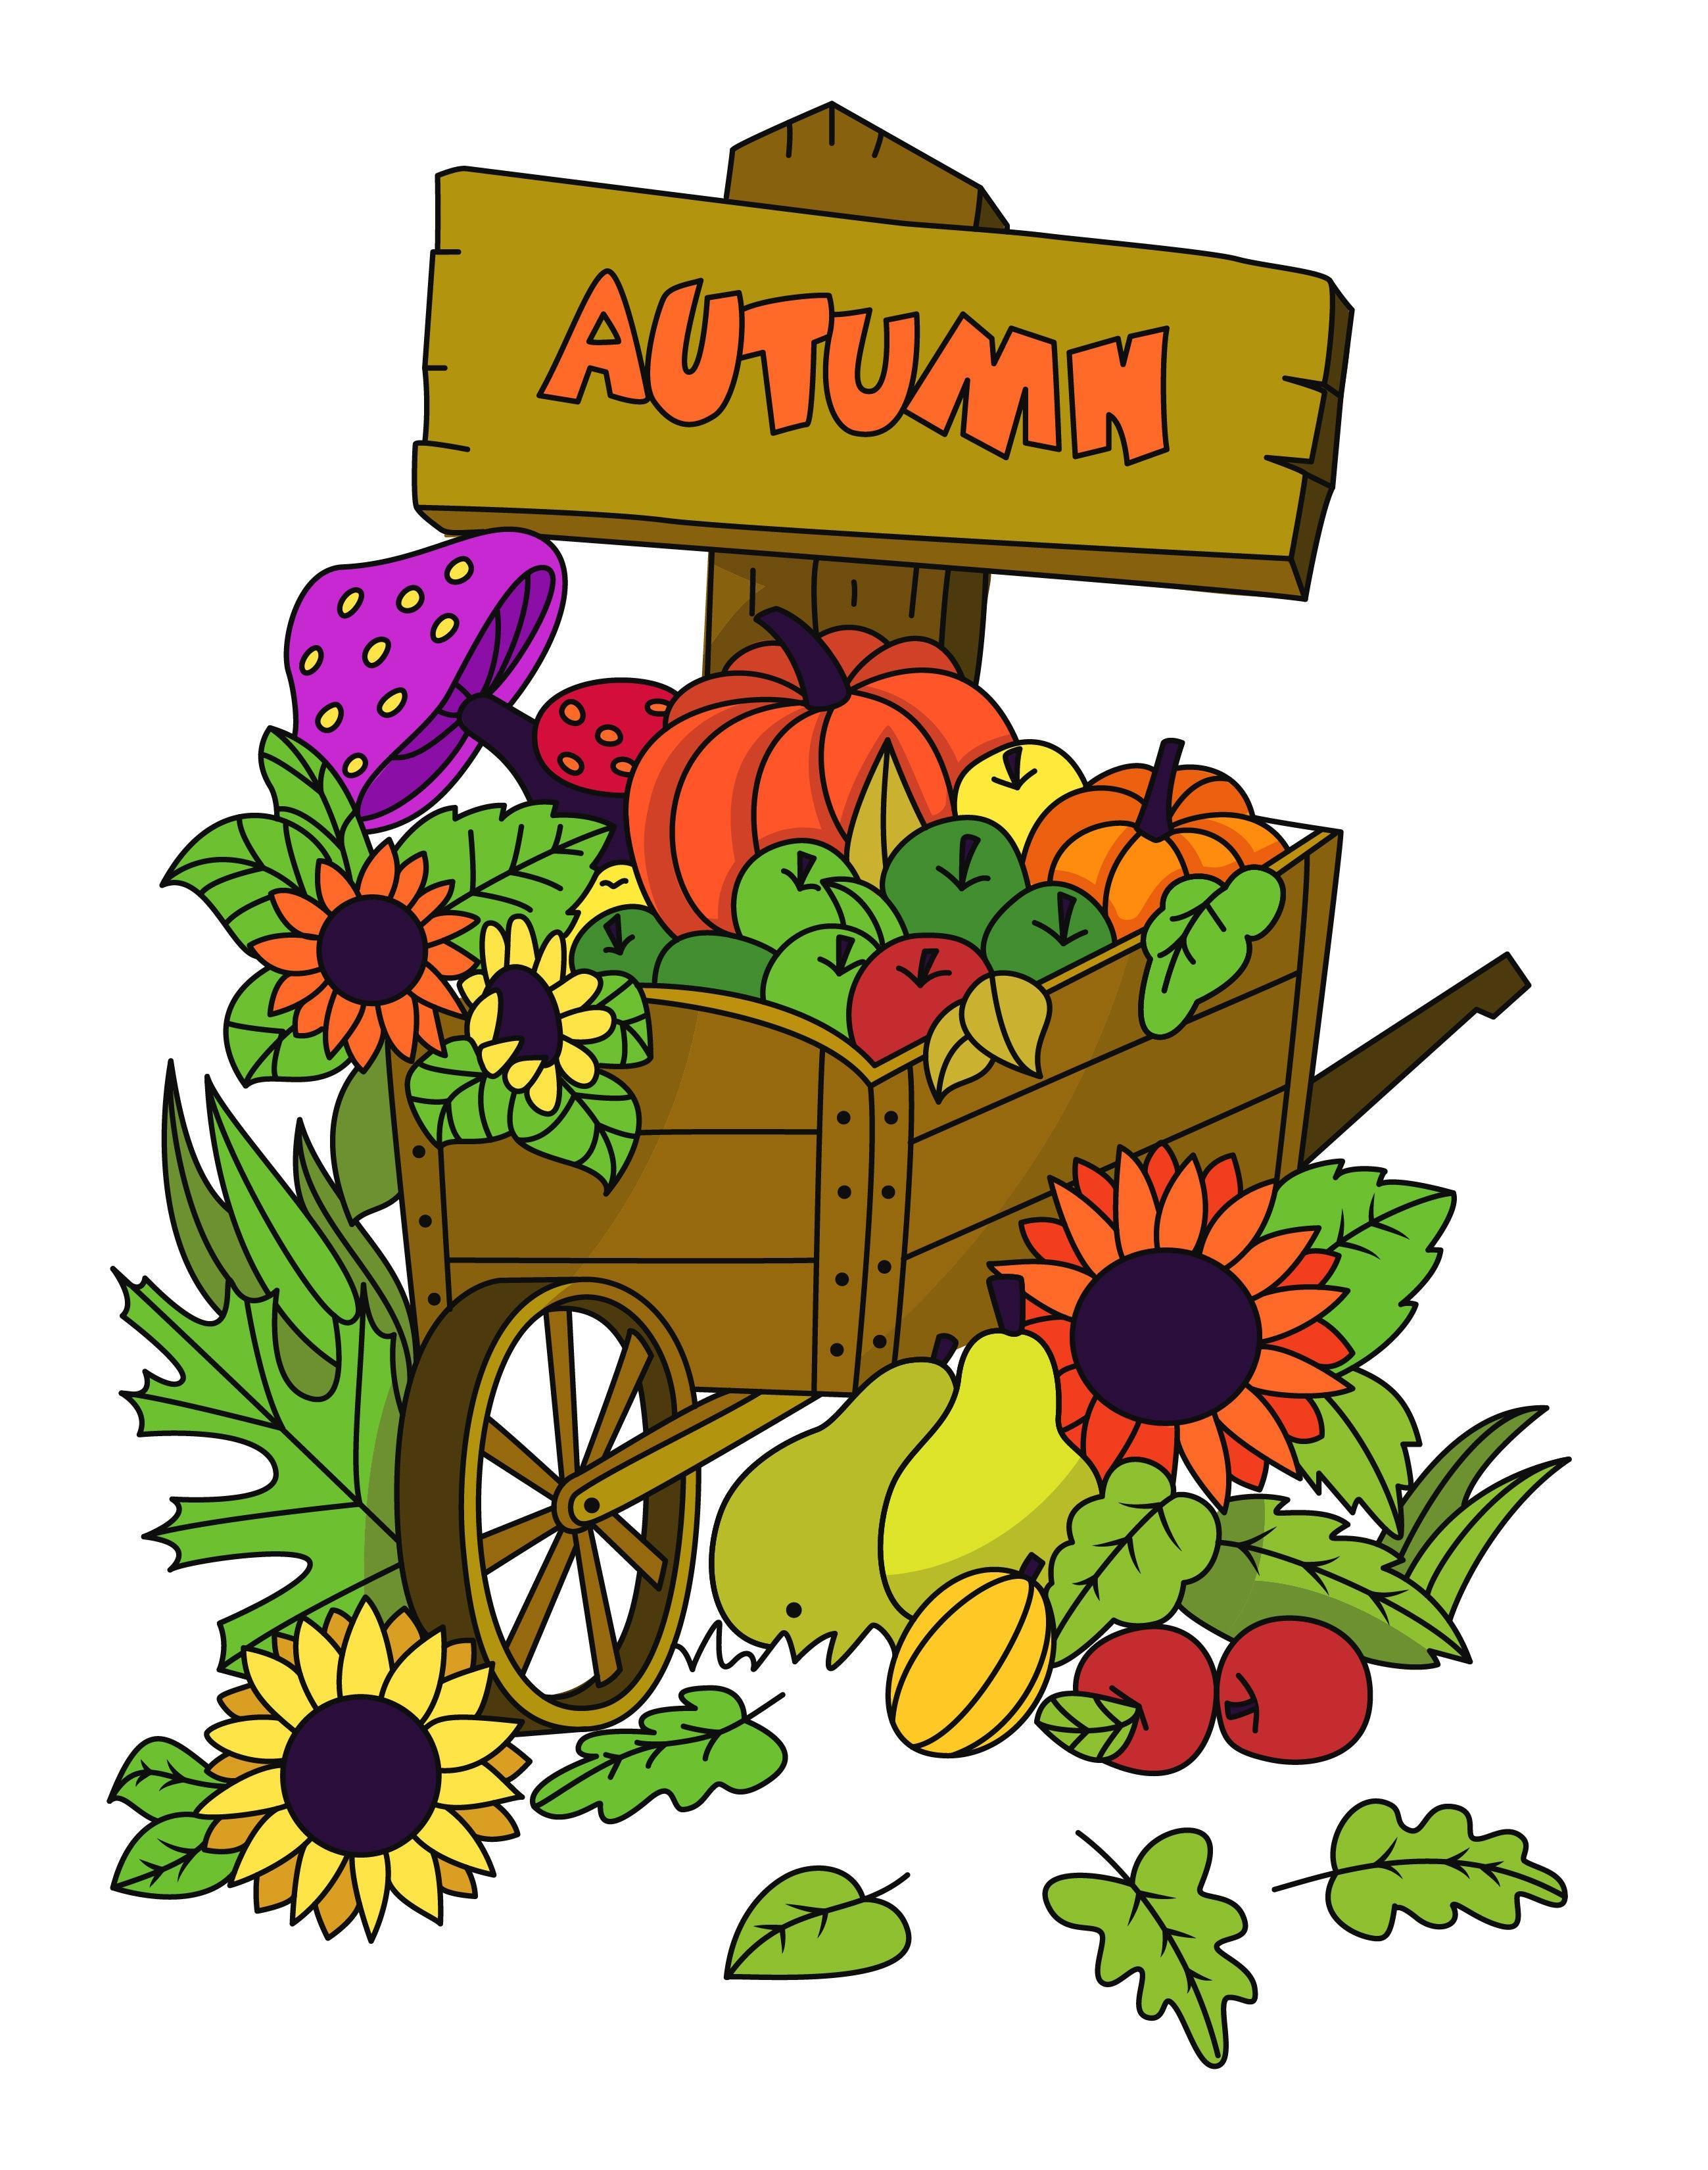 Autumn - Coloring Page - SJPrinter 